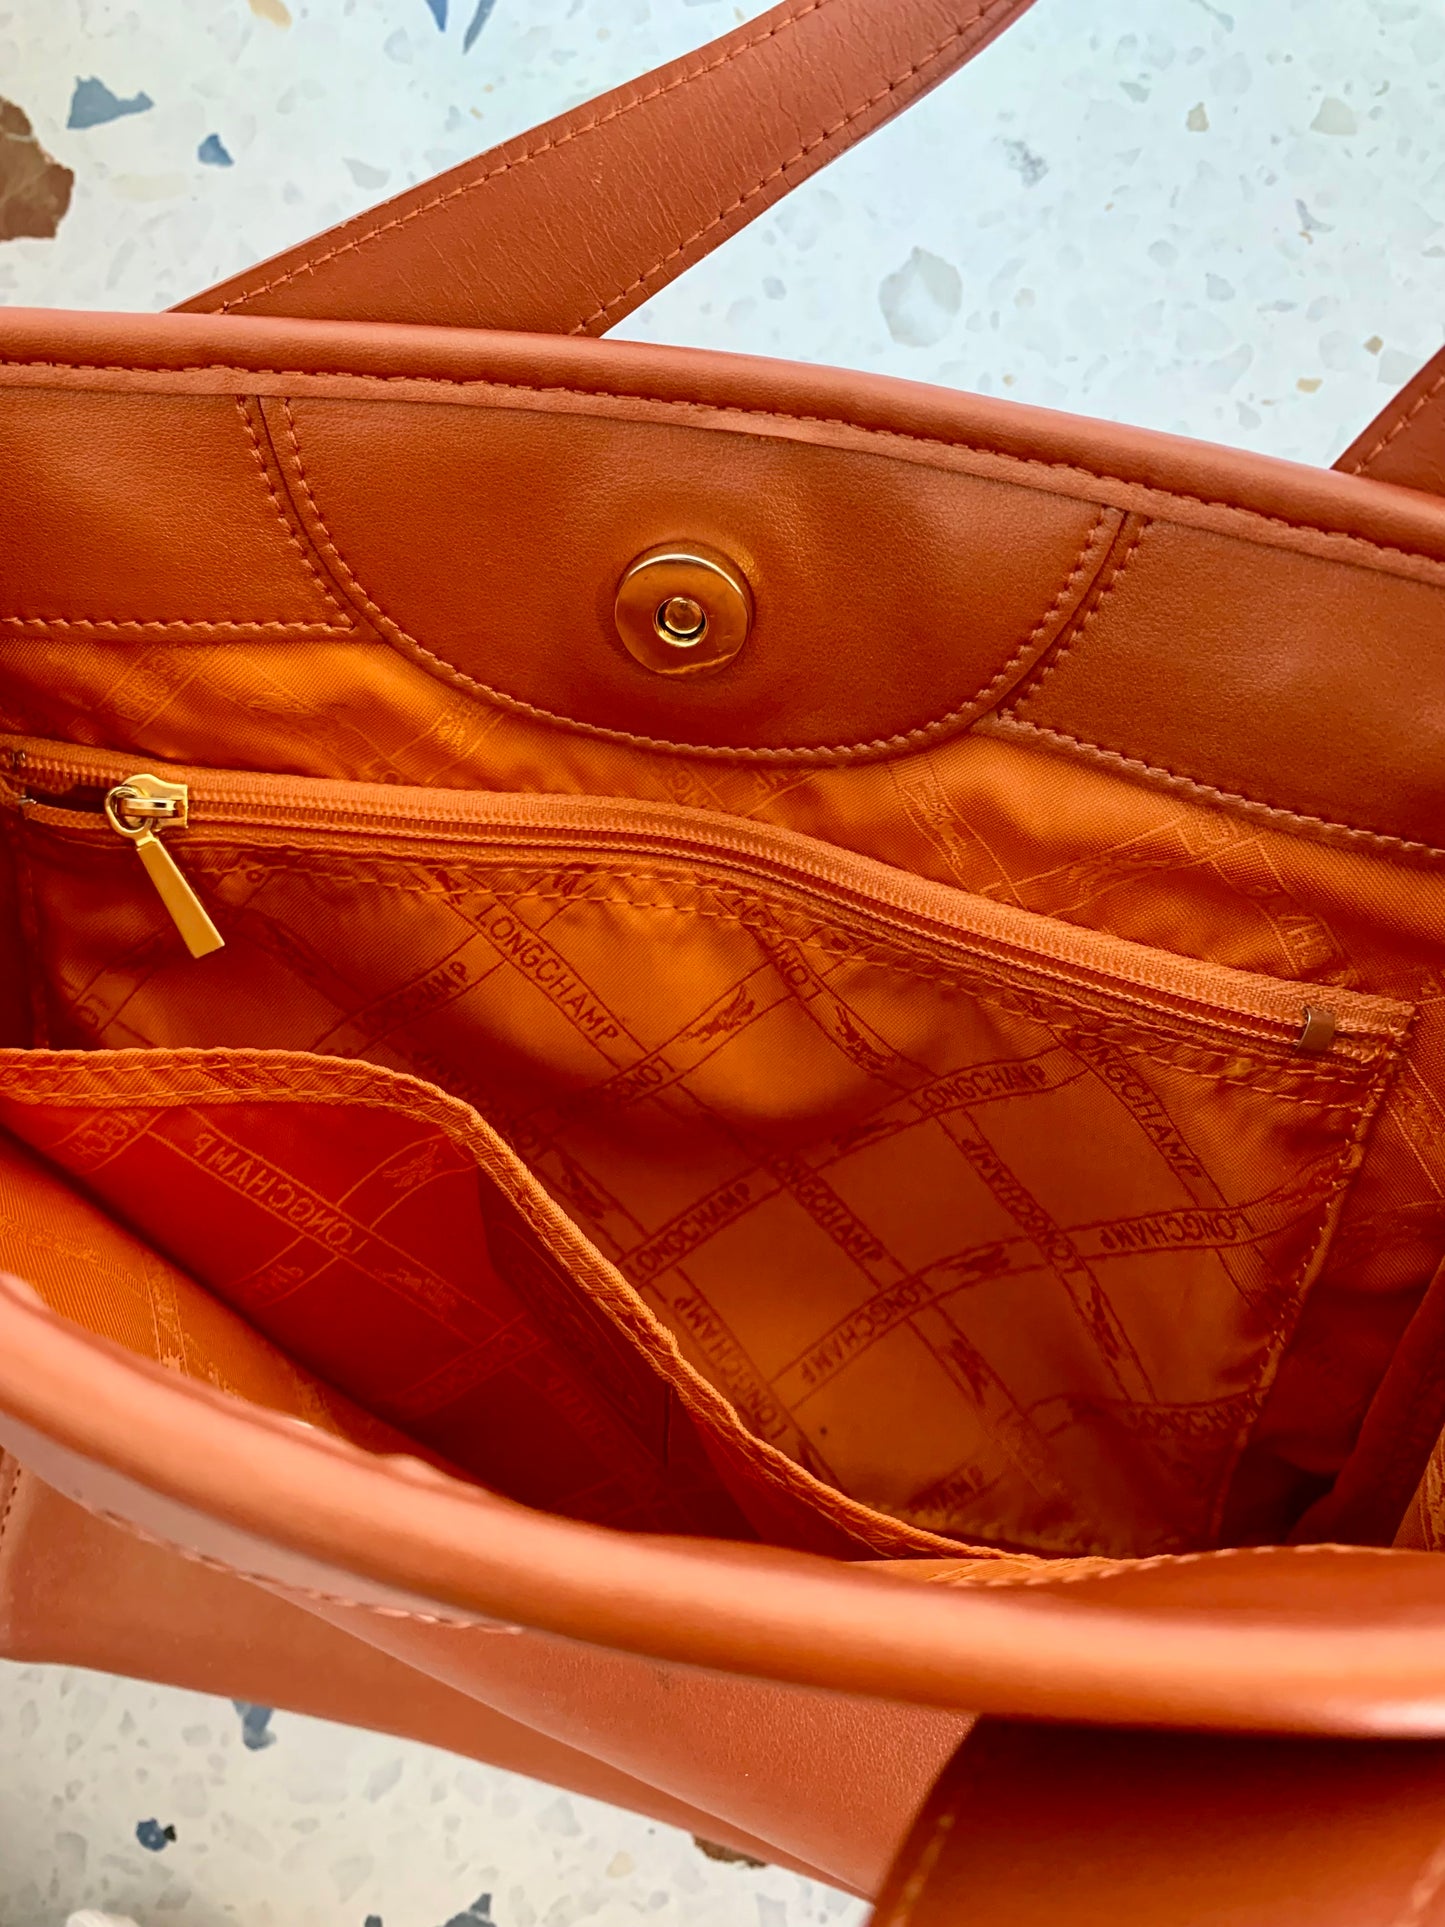 Longchamp burnt orange bag